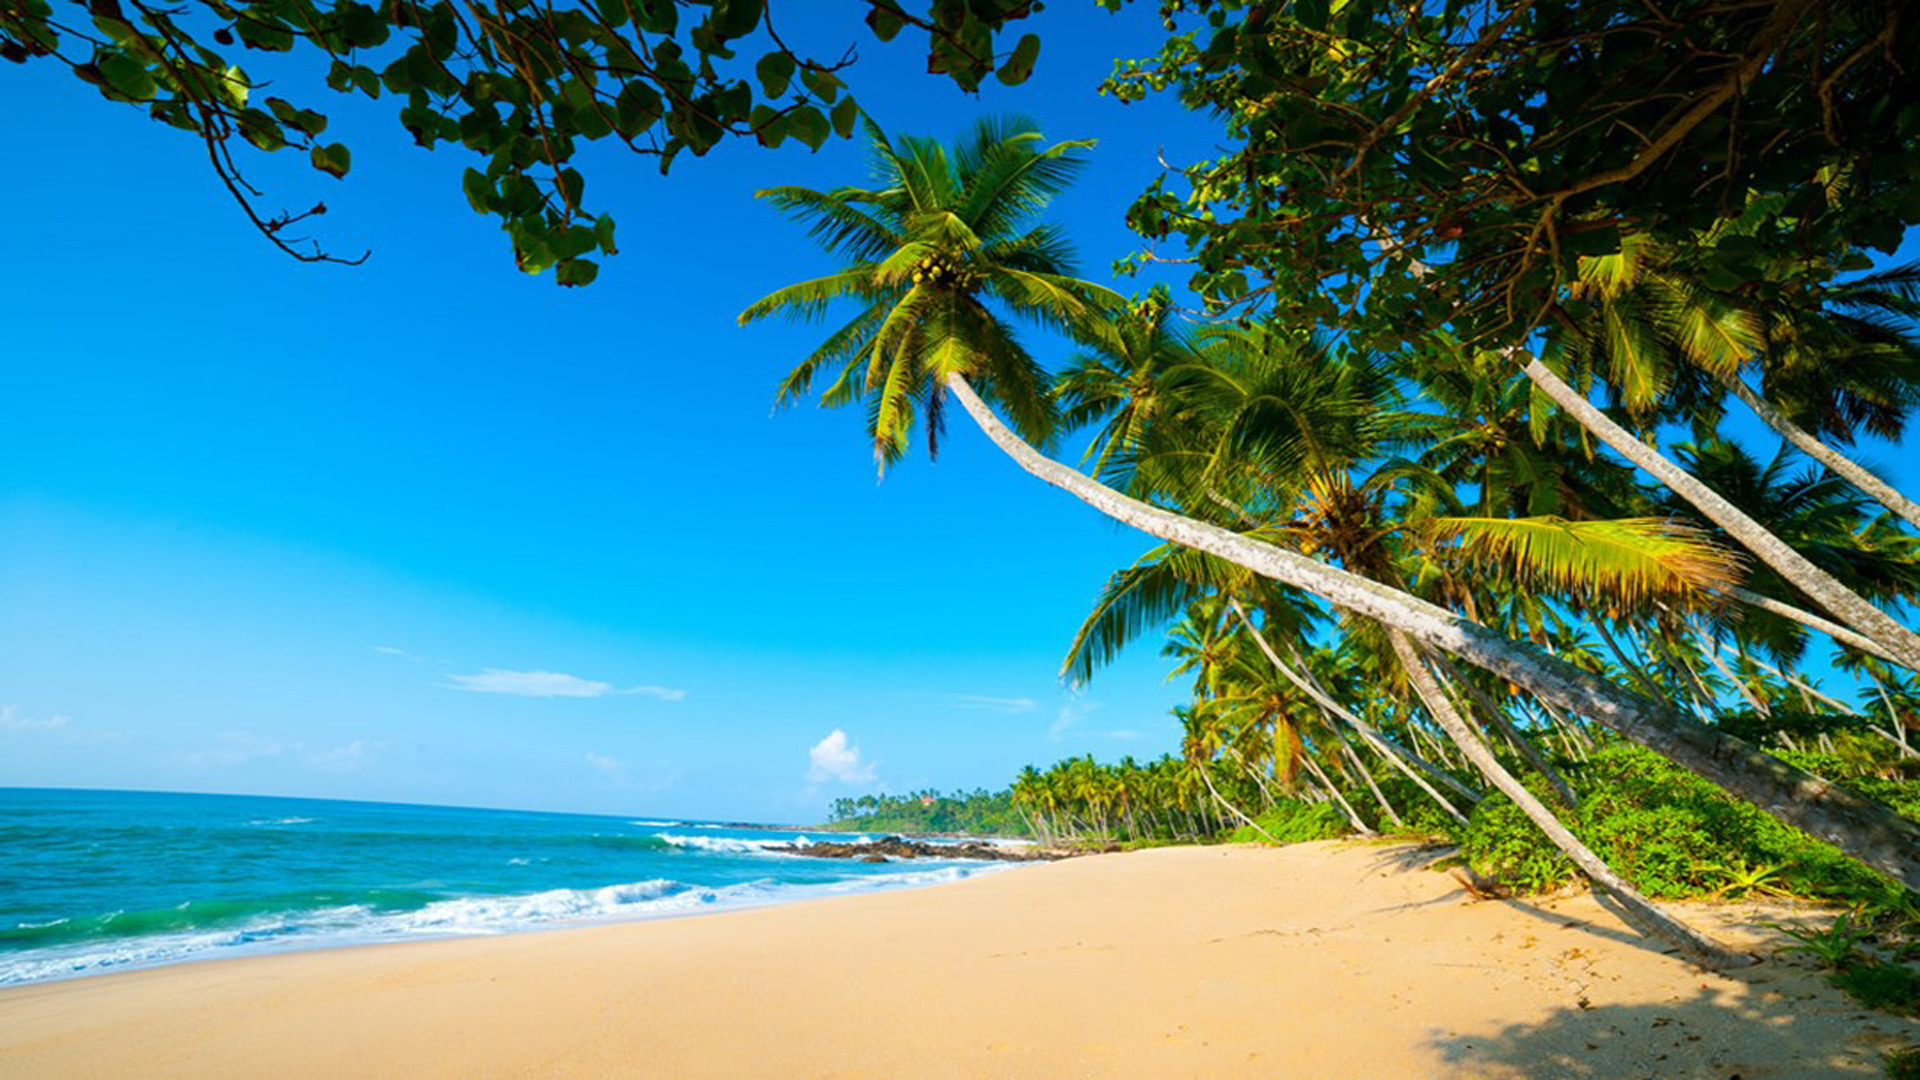 Arugambay Exoctic Beaches Sri Lanka Sandy Beaches Blue Waters Palm